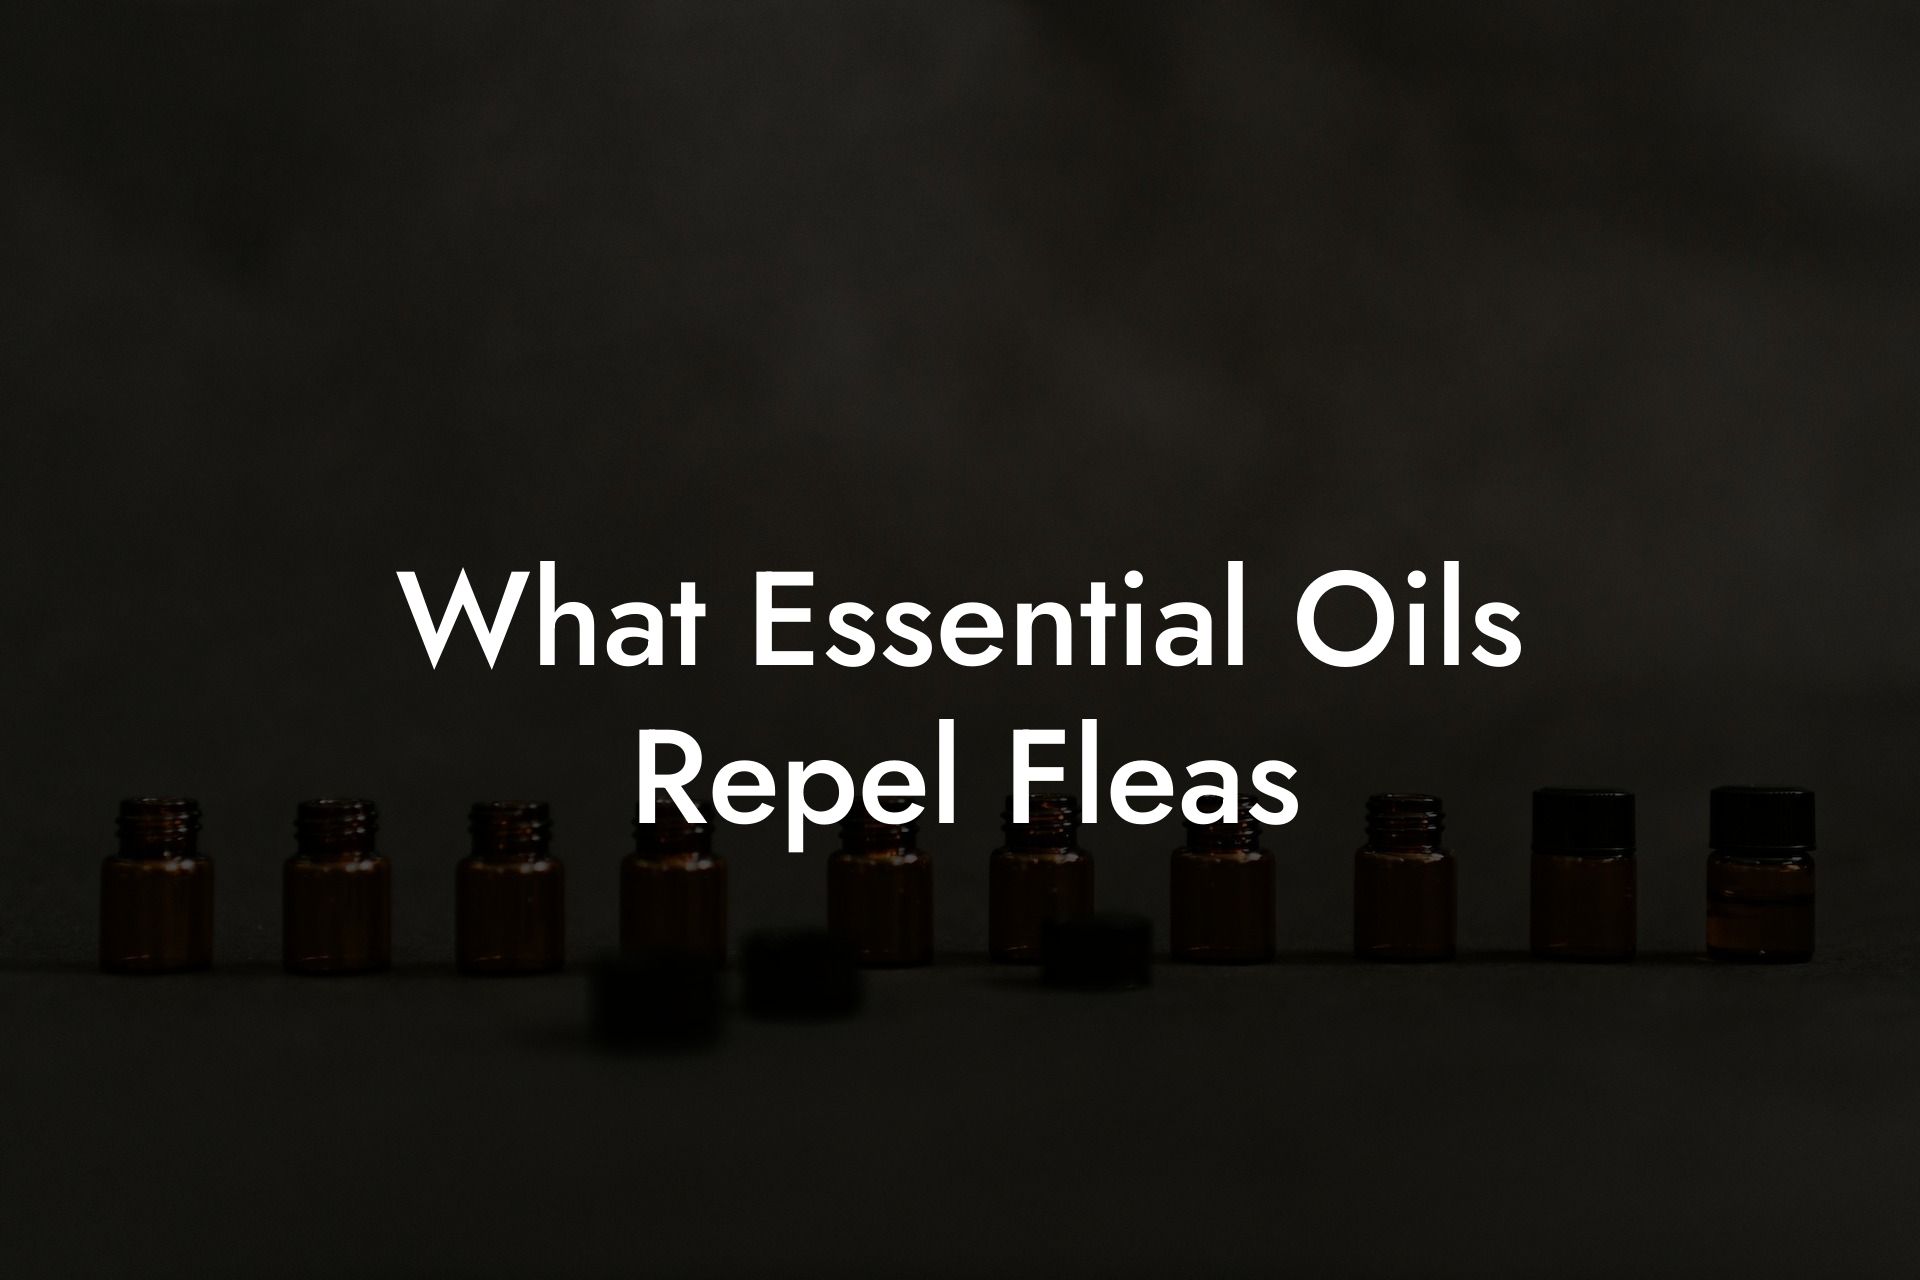 What Essential Oils Repel Fleas